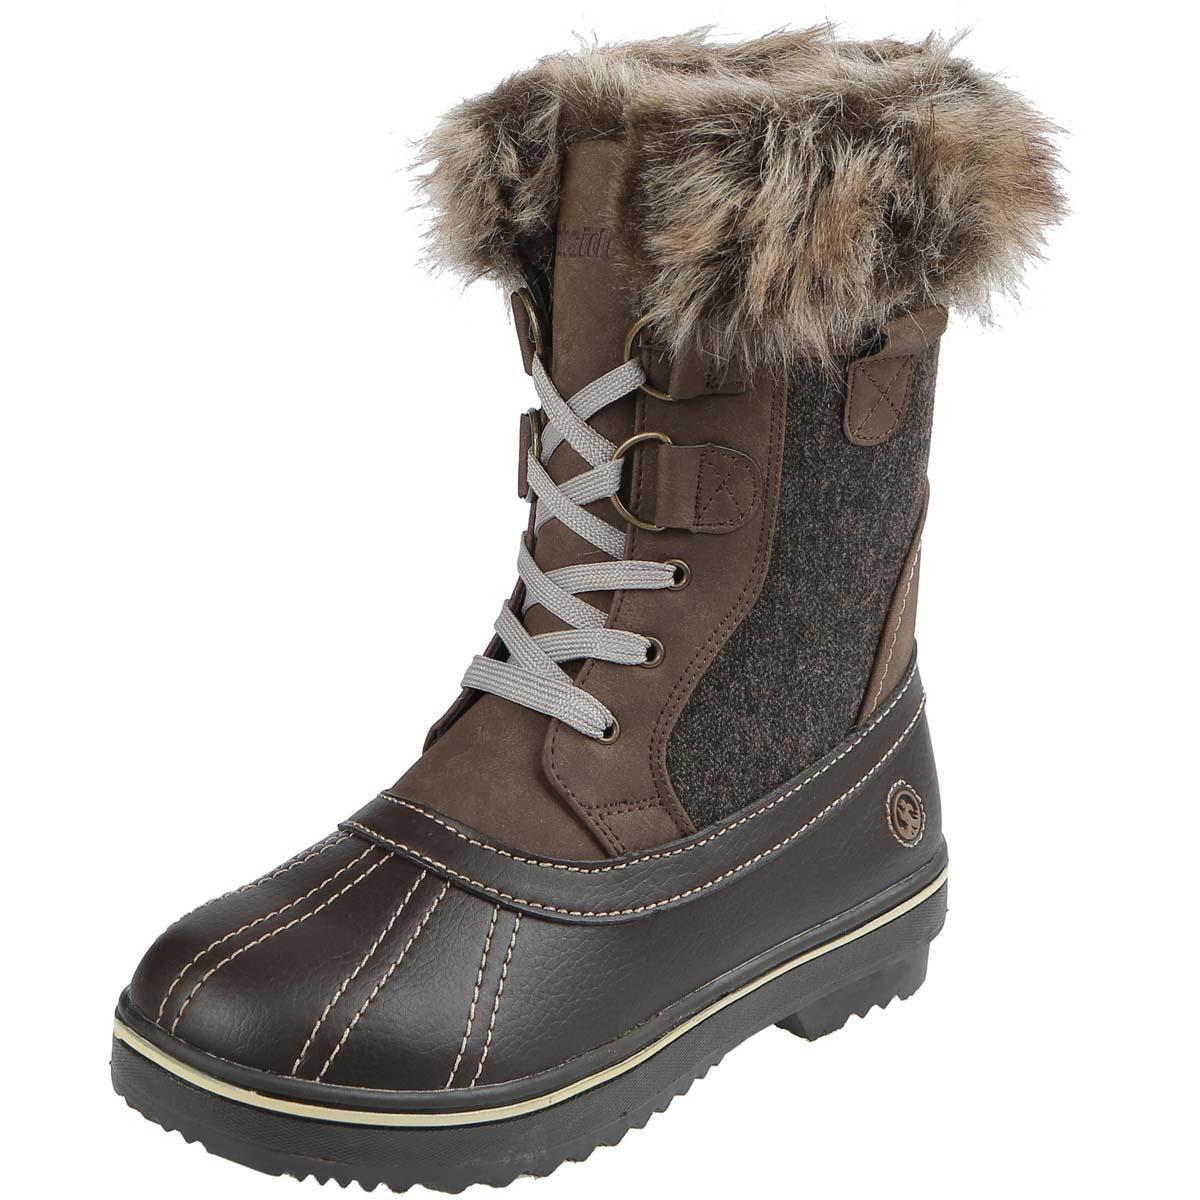 Northside Northside Brookelle Boots - Women's | WinterWomen